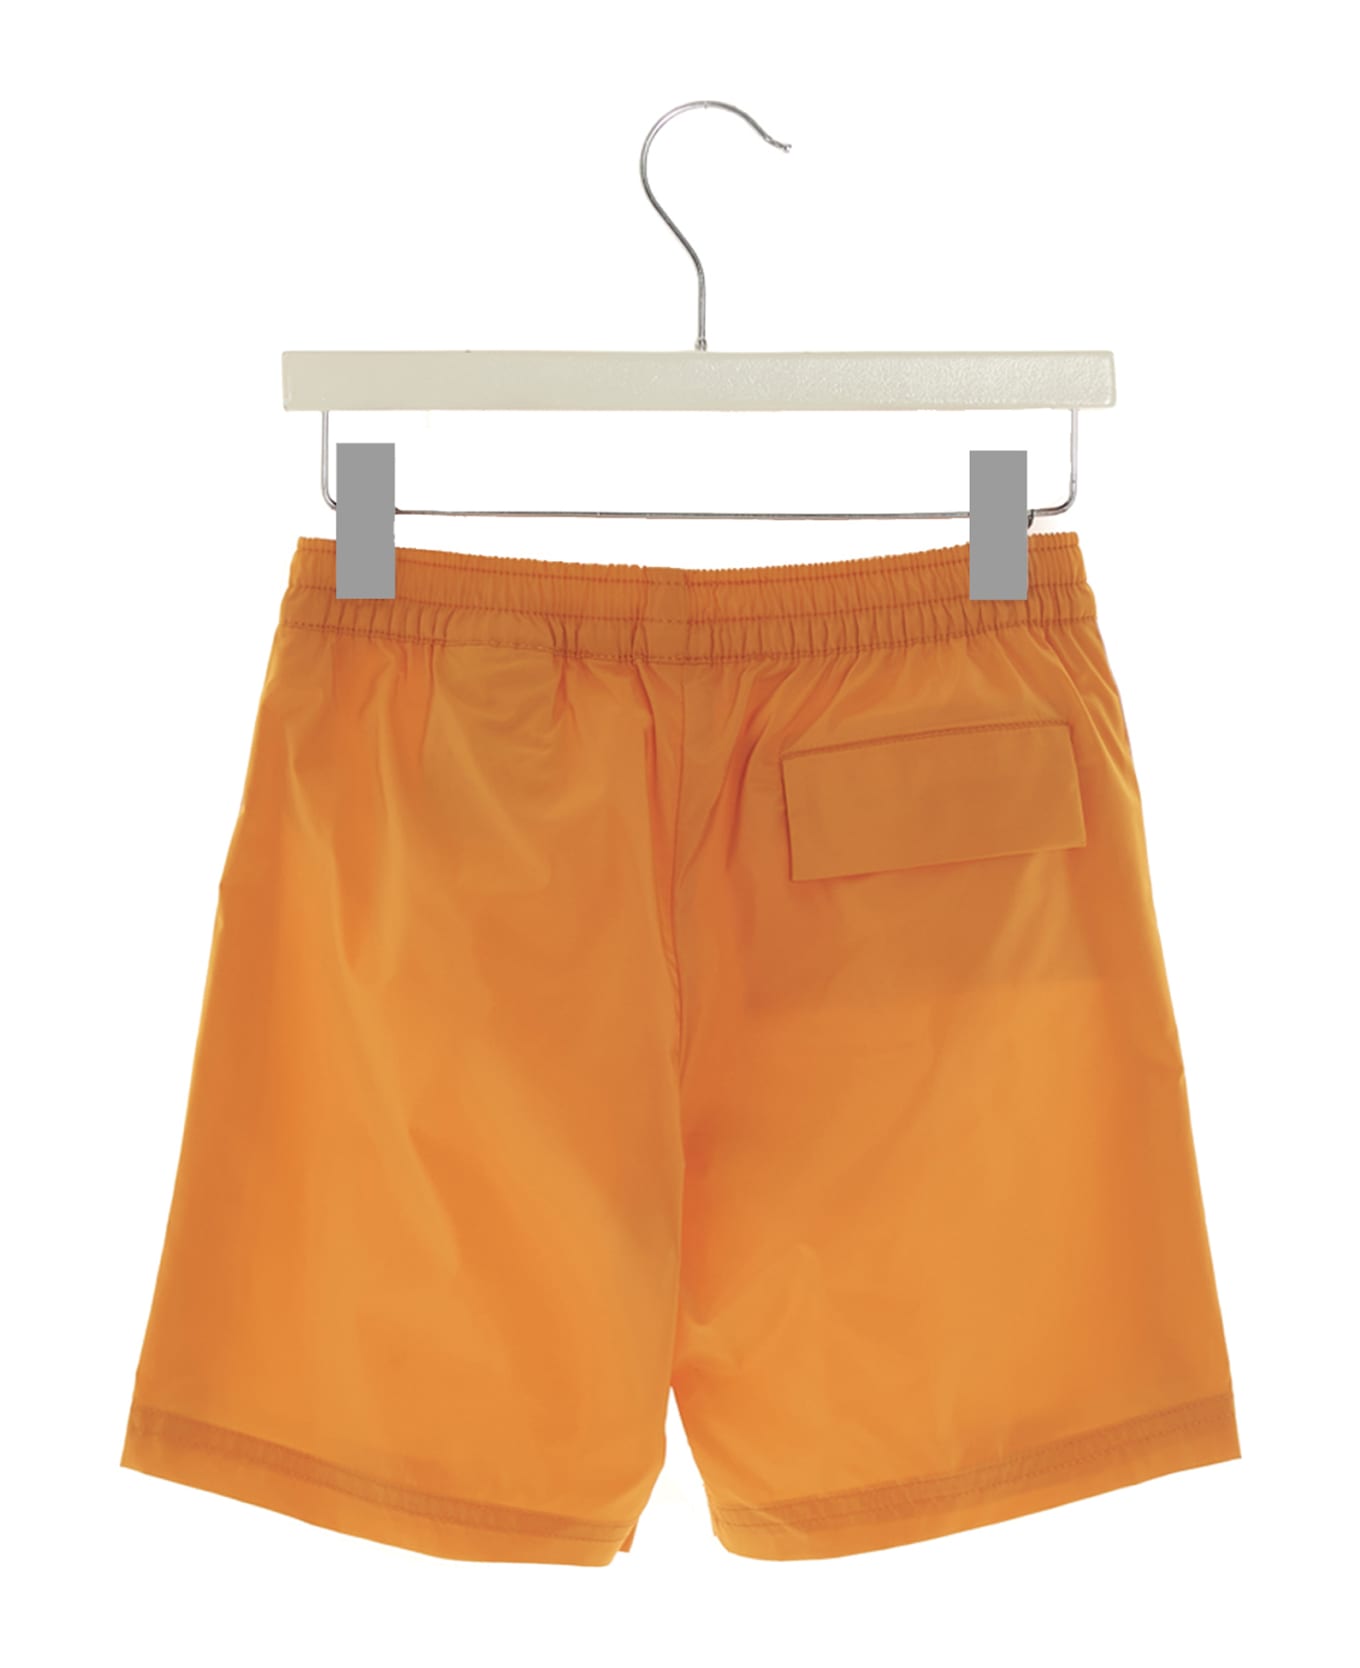 Palm Angels Logo Print Swim Shorts - Orange